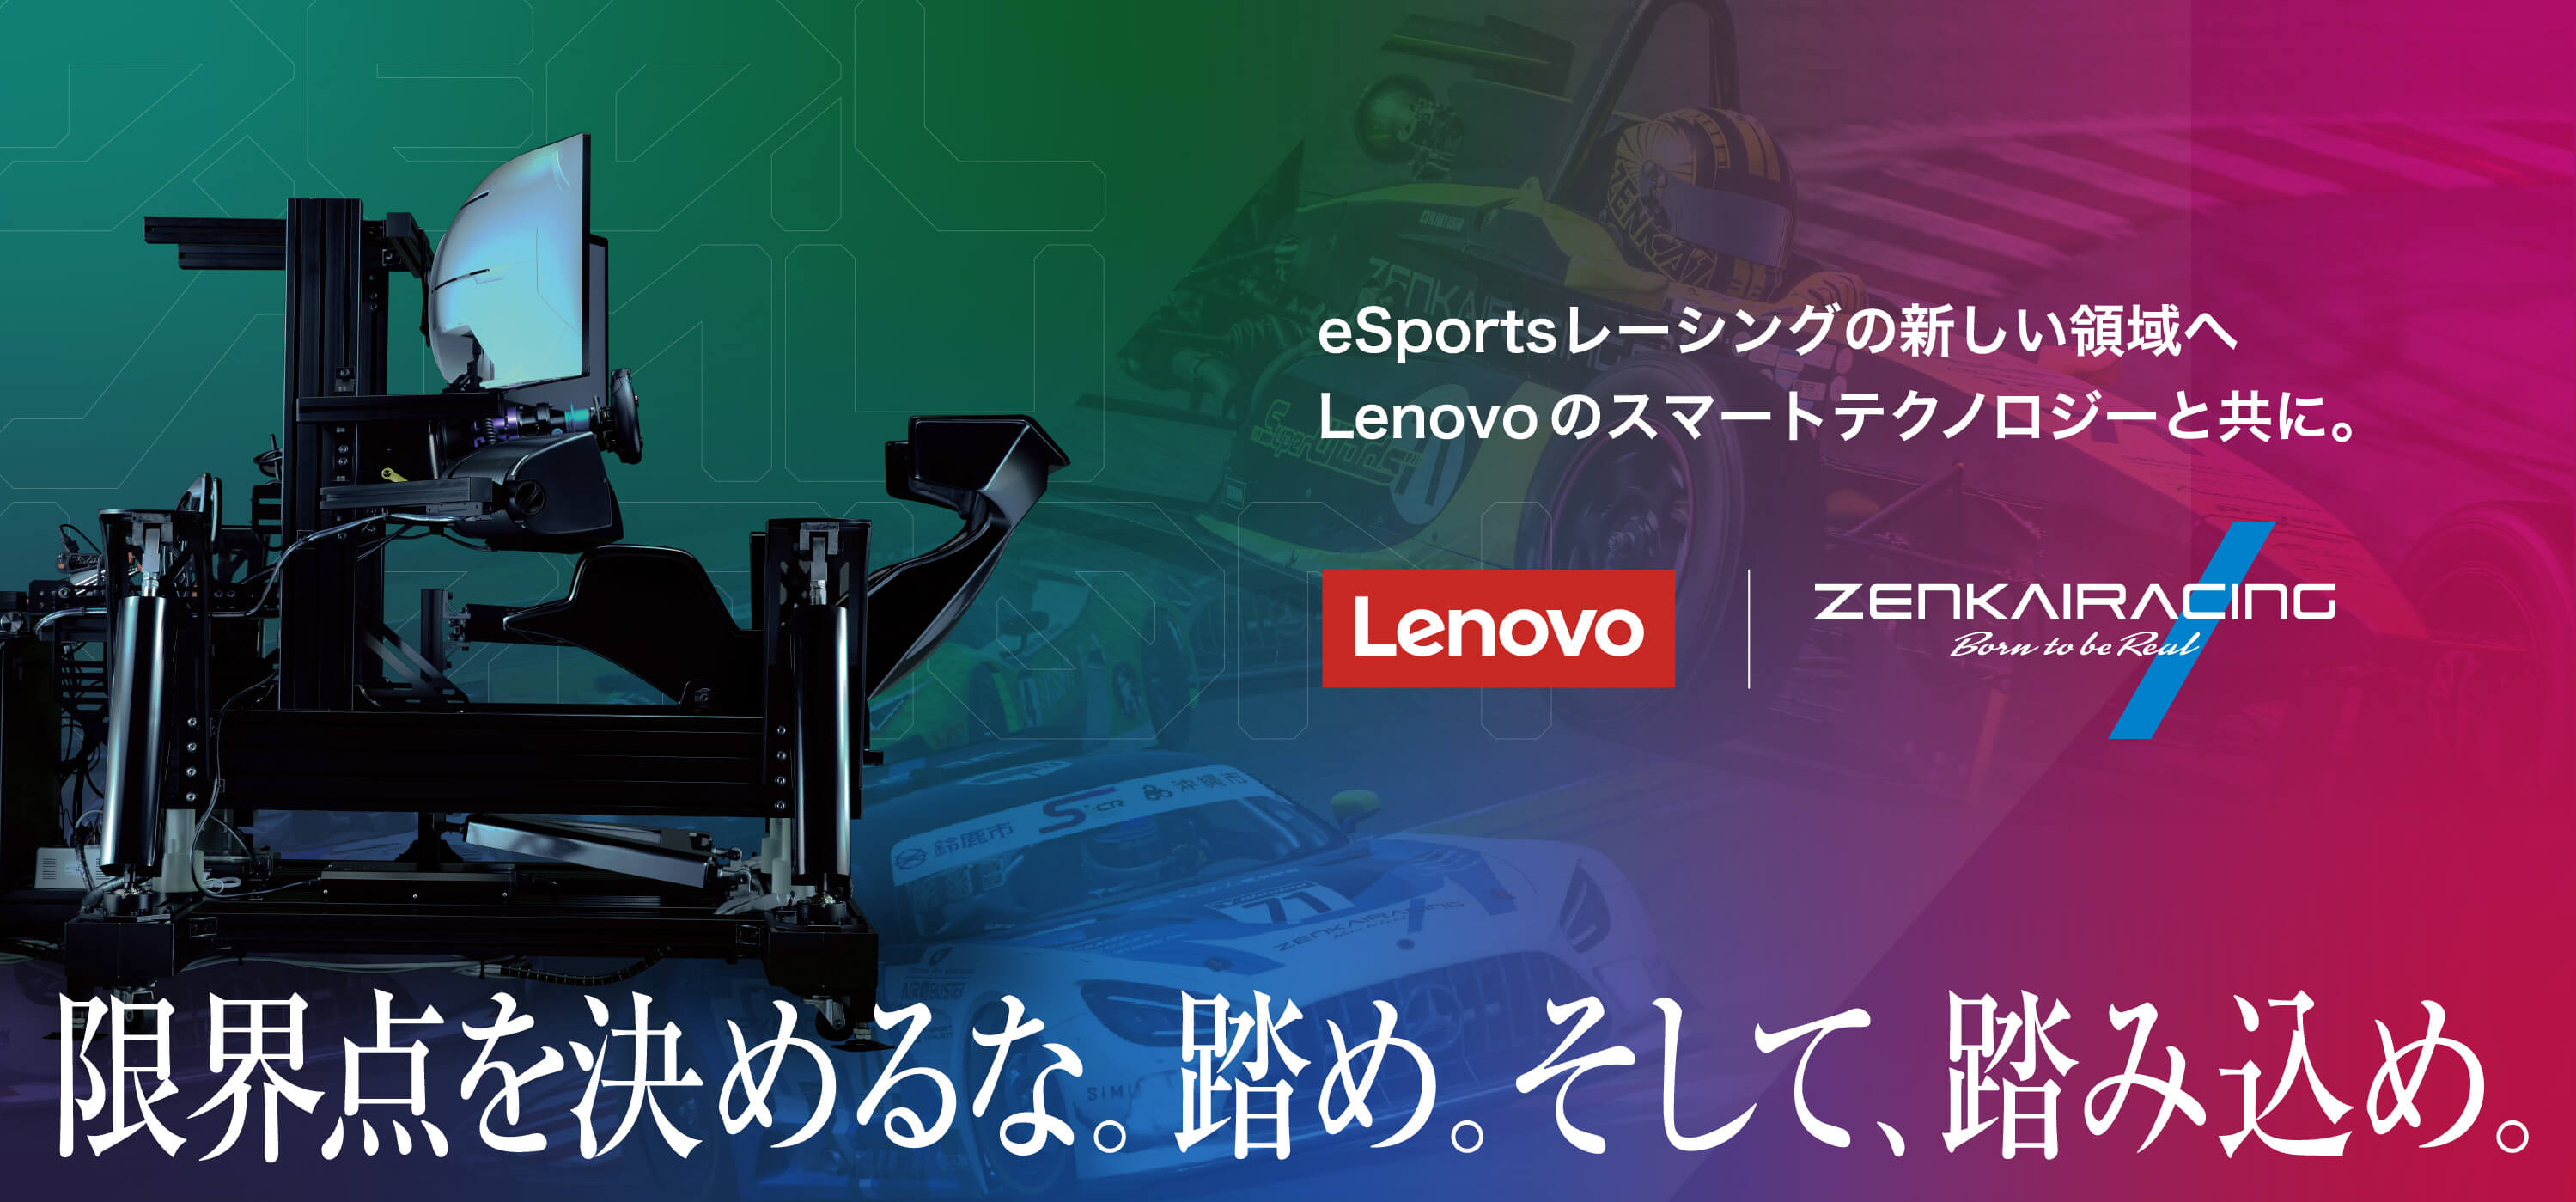 eSportsレーシングの新しい領域へLenovoのスマートテクノロジーと共に。Lenovo | ZENKAIRACING。限界点を決めるな。踏め。そして、踏み込め。